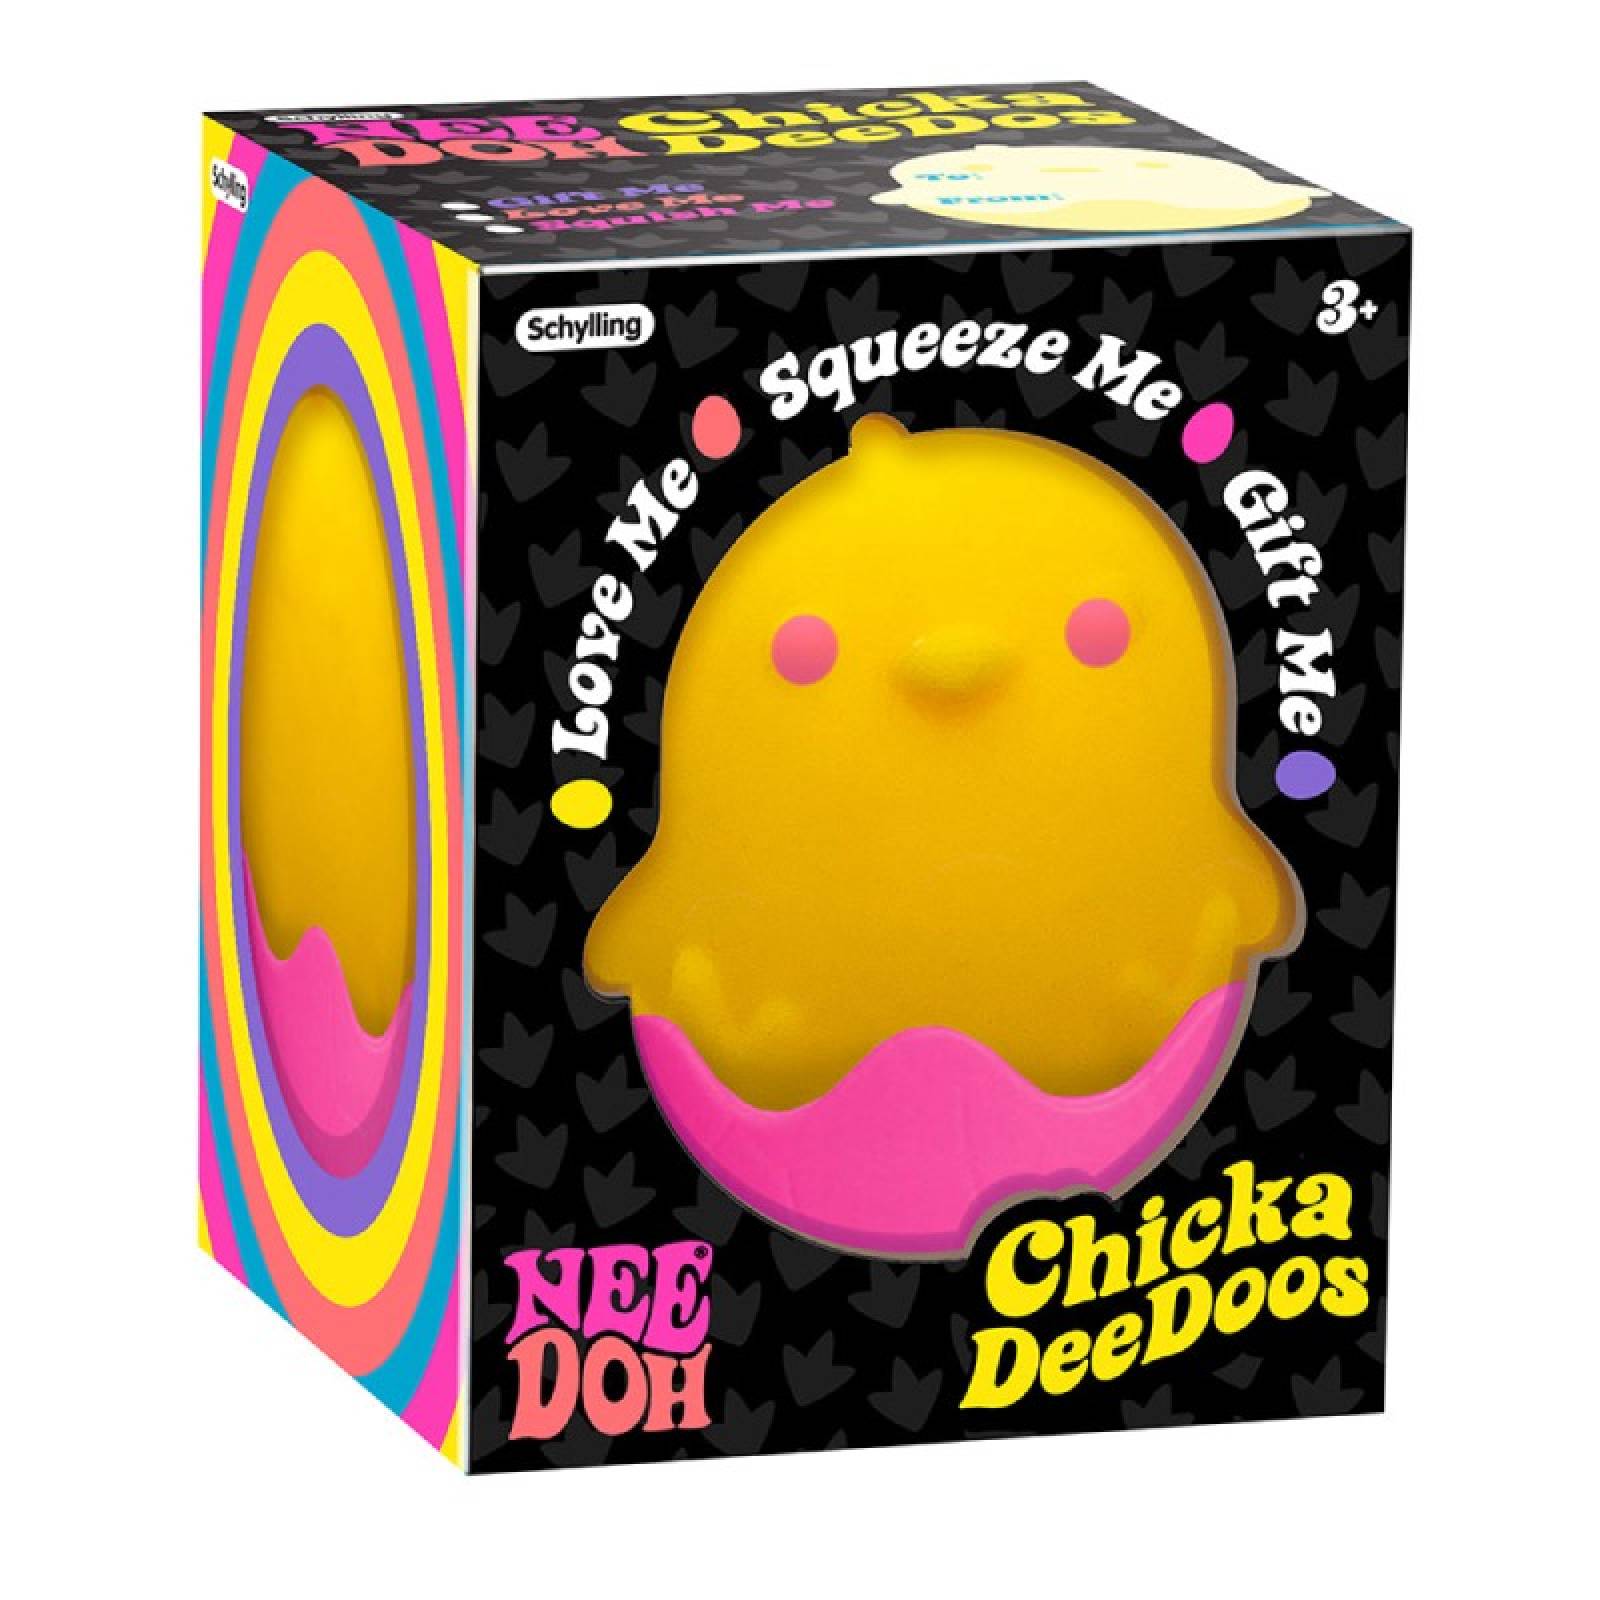 NeeDoh Chicka DeeDoos Toy 3+ thumbnails